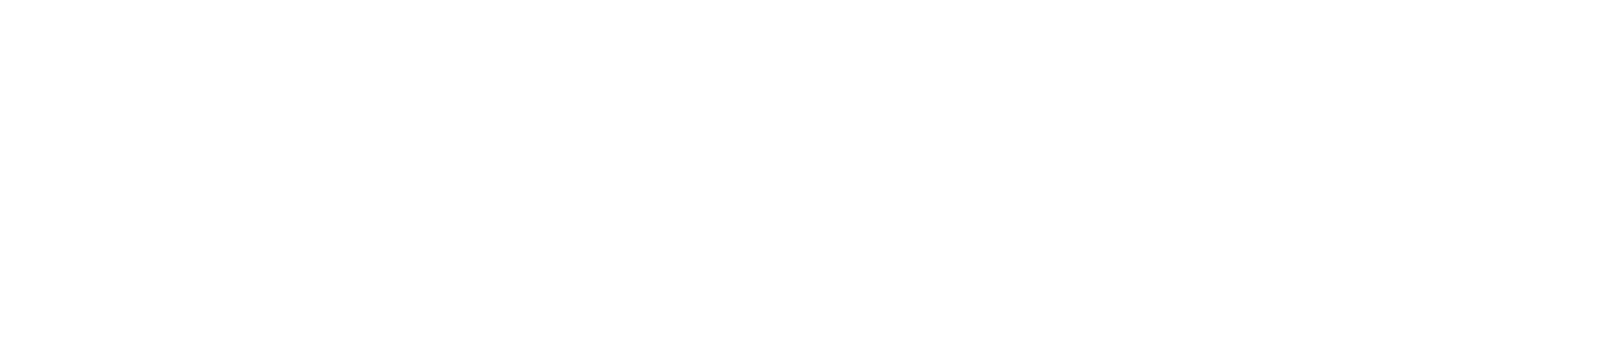 AirTAC International logo grand pour les fonds sombres (PNG transparent)